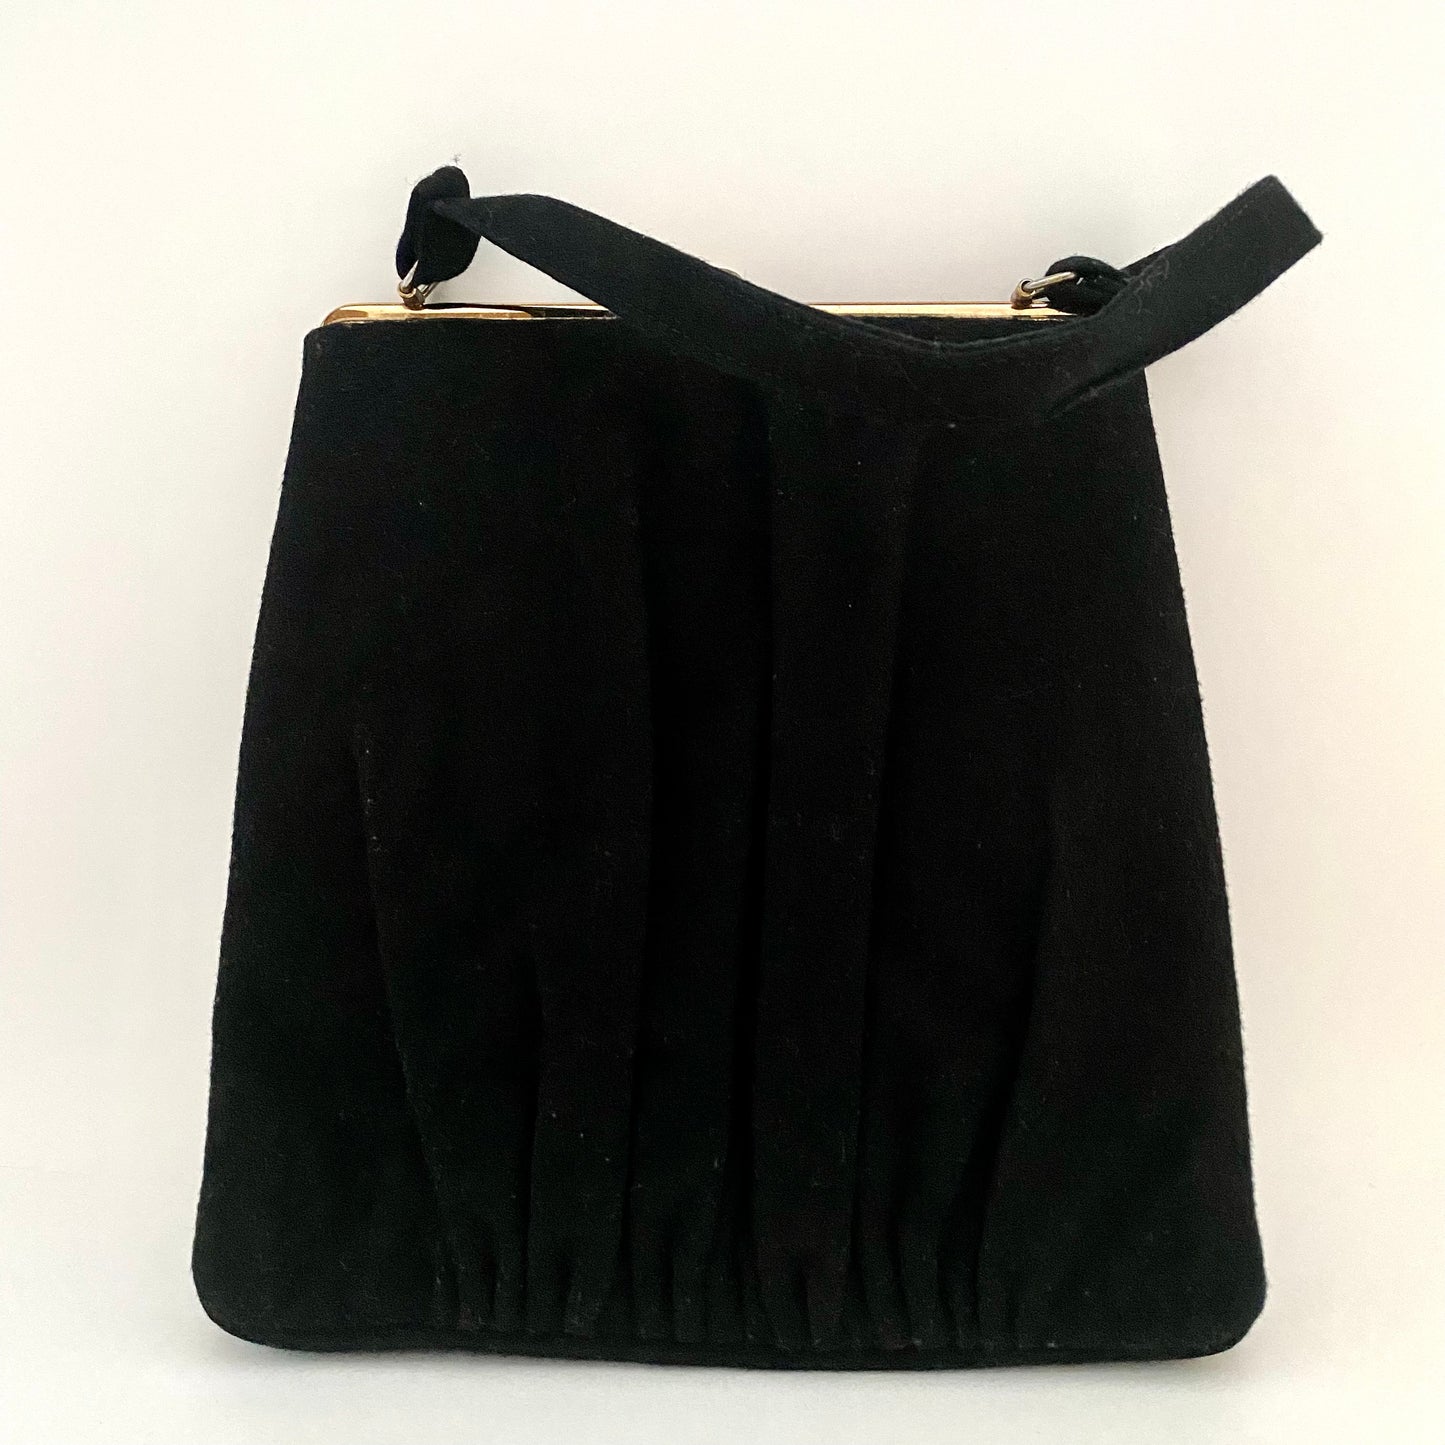 Late 40s/ Early 50s Black Fabric Handbag